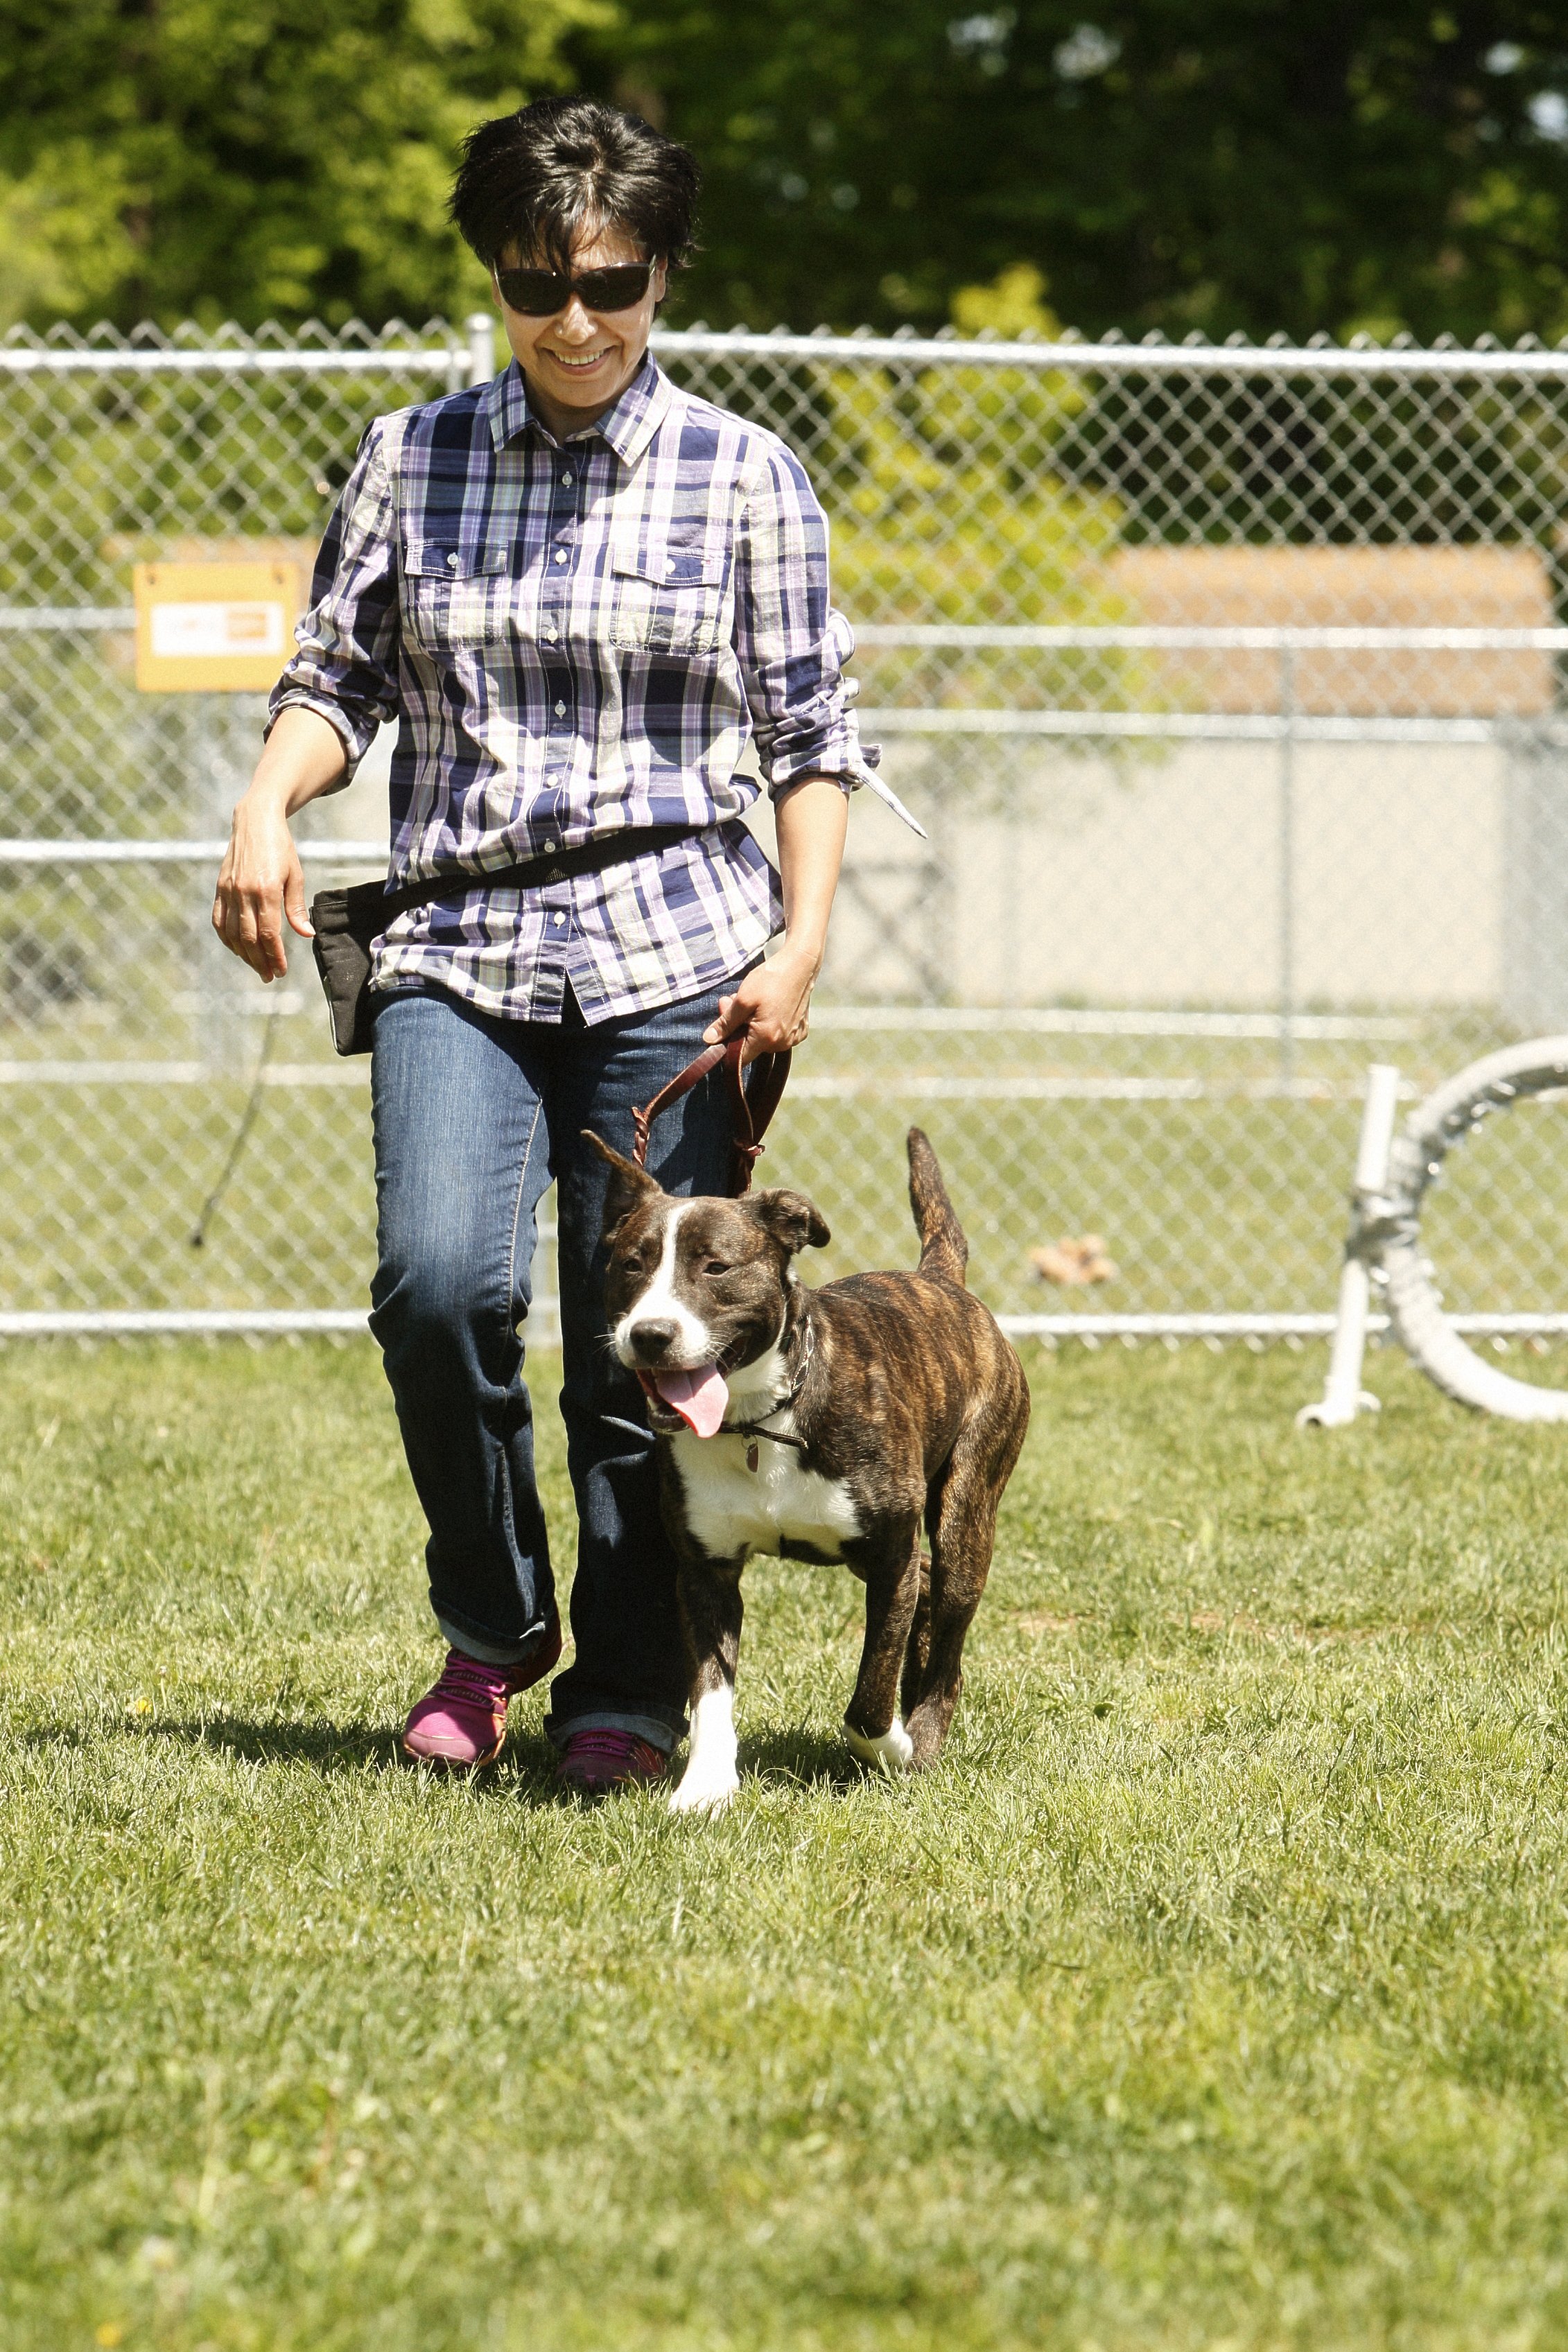   Behavior and Training Center   Register your dog for classes today!   REGISTER!  